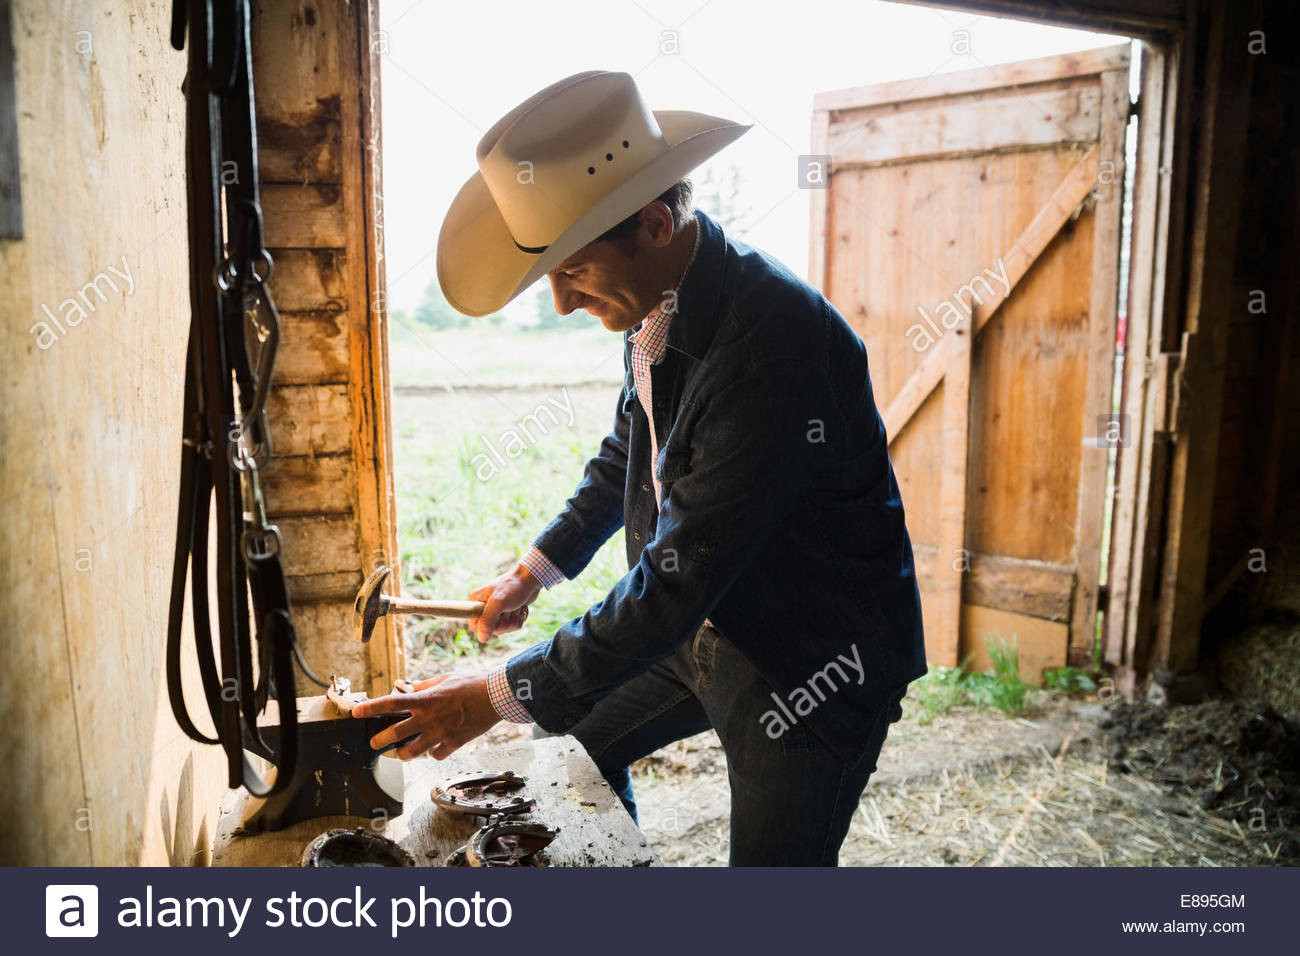 Rancher hammering horseshoe at workbench in barn Stock Photo